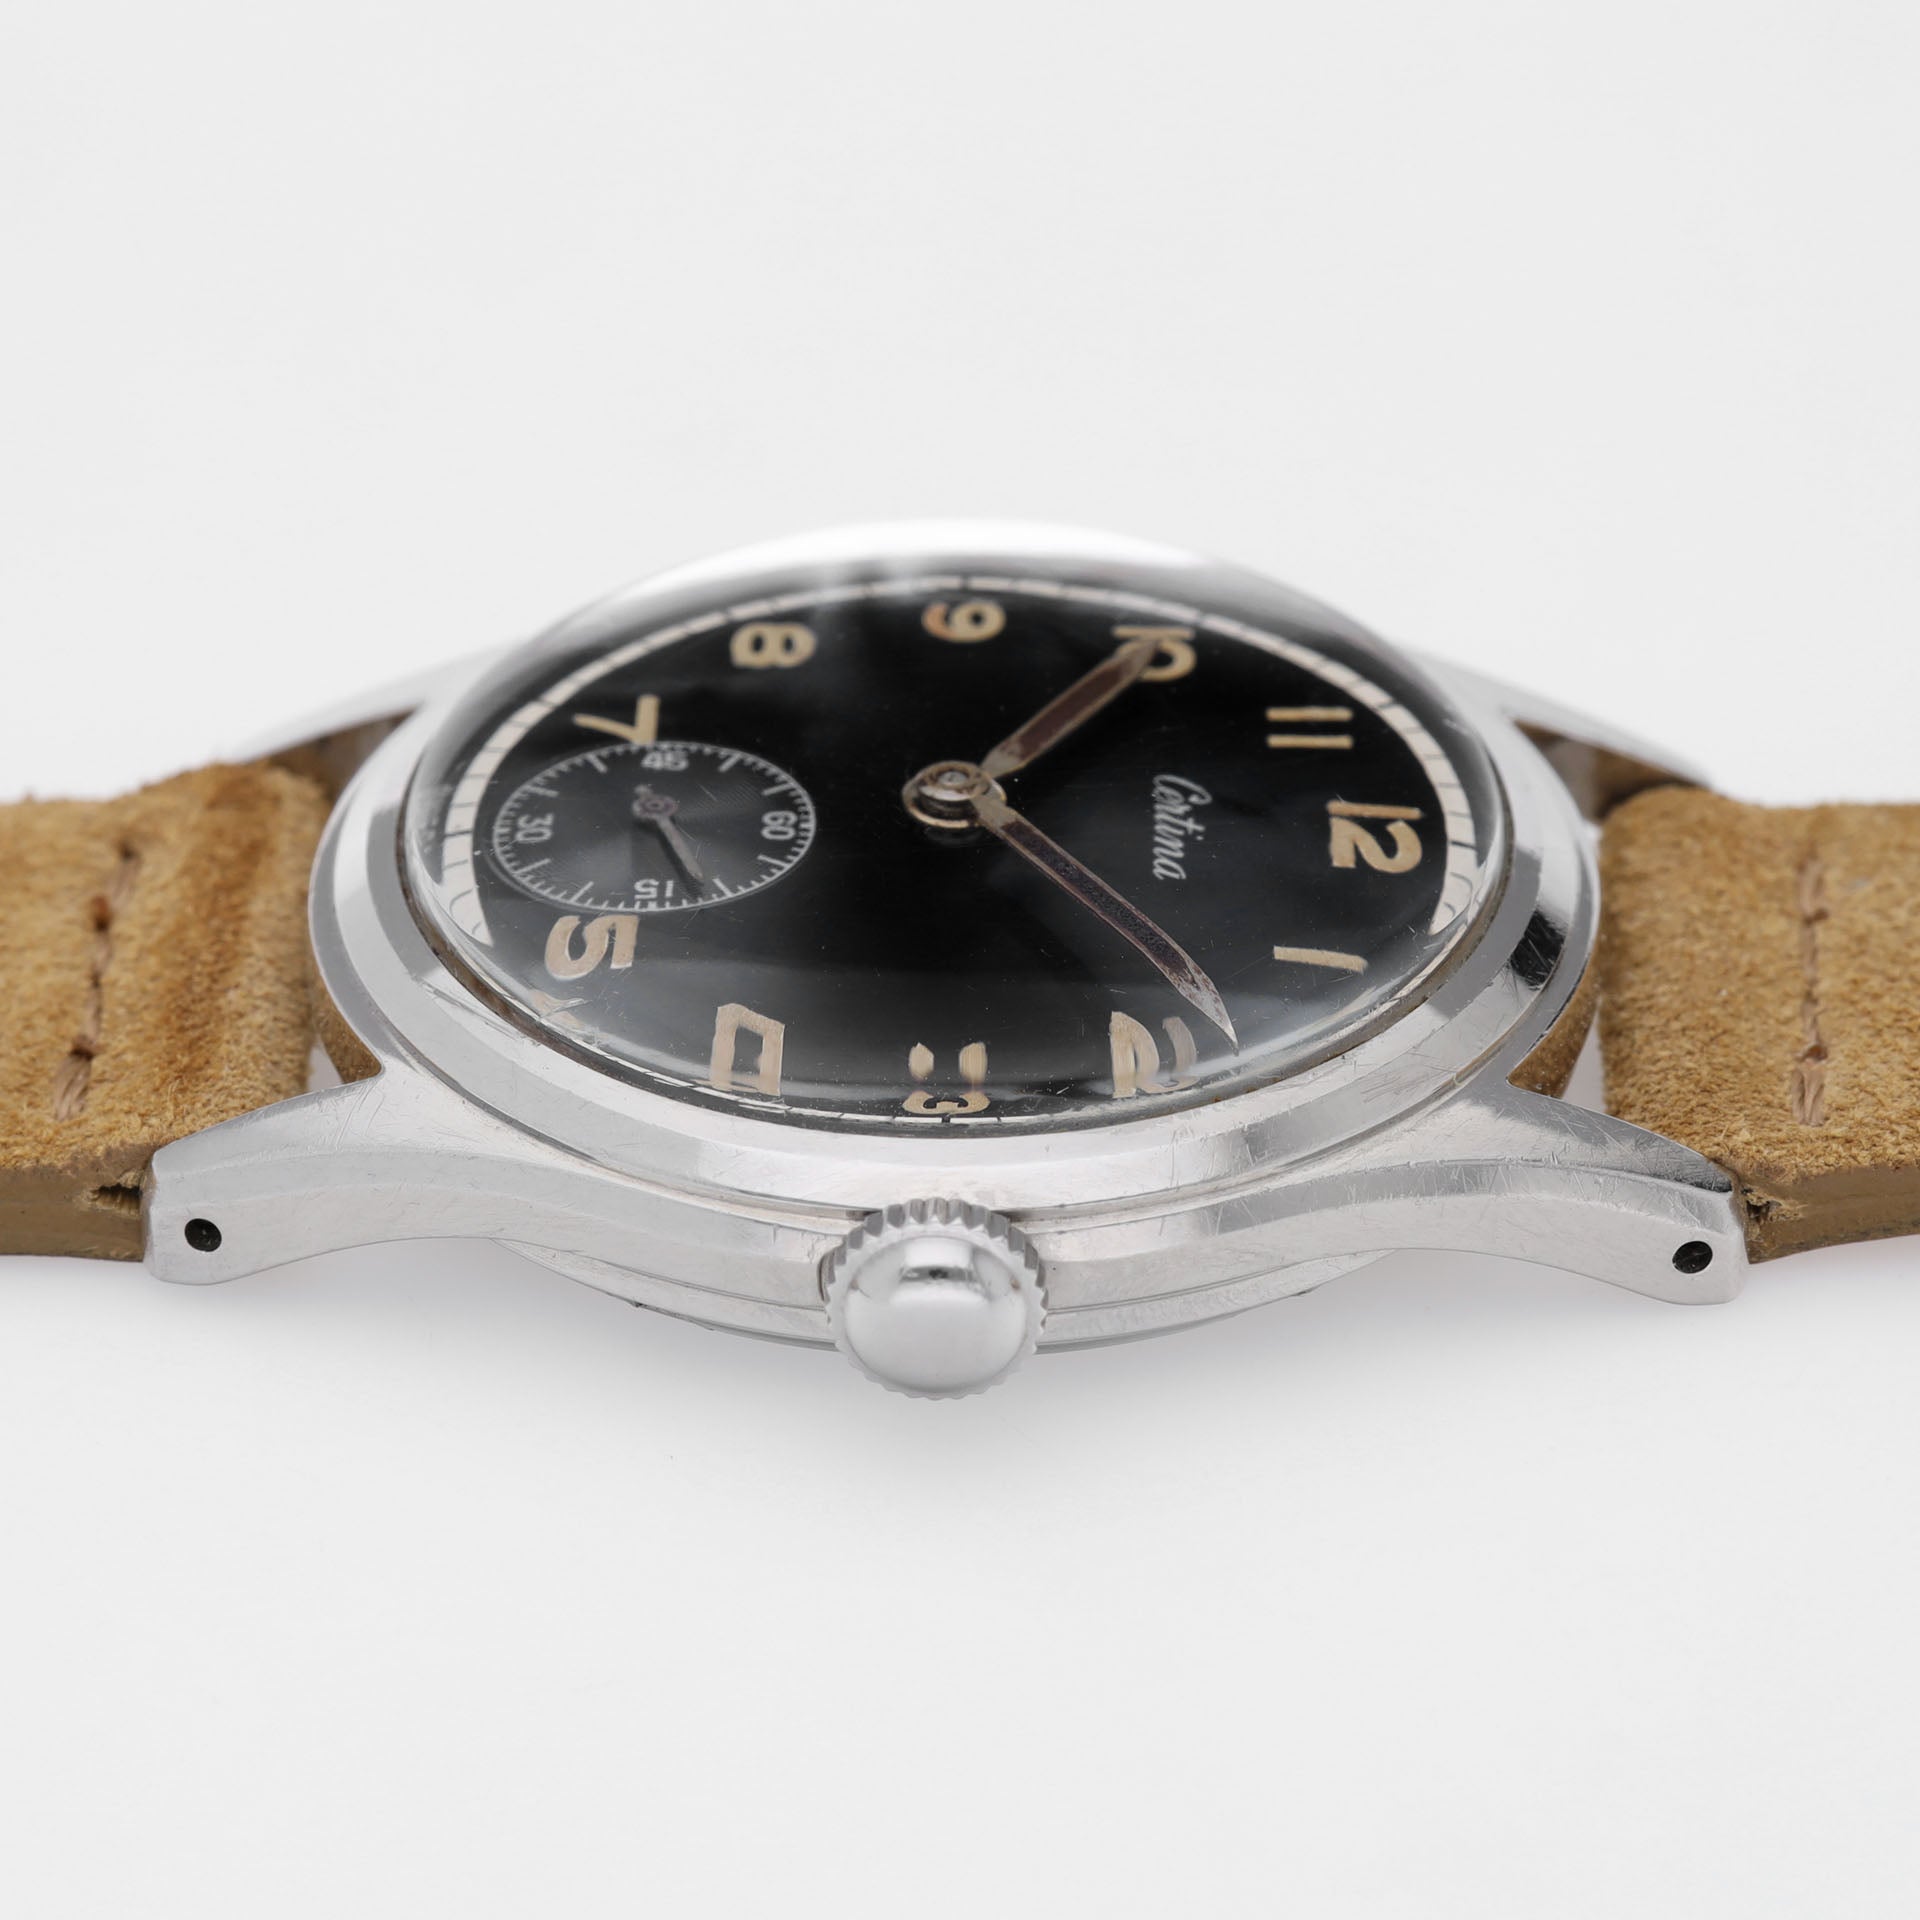 Certina 8721.1 Dress Watch in Steel Glossy Black Dial